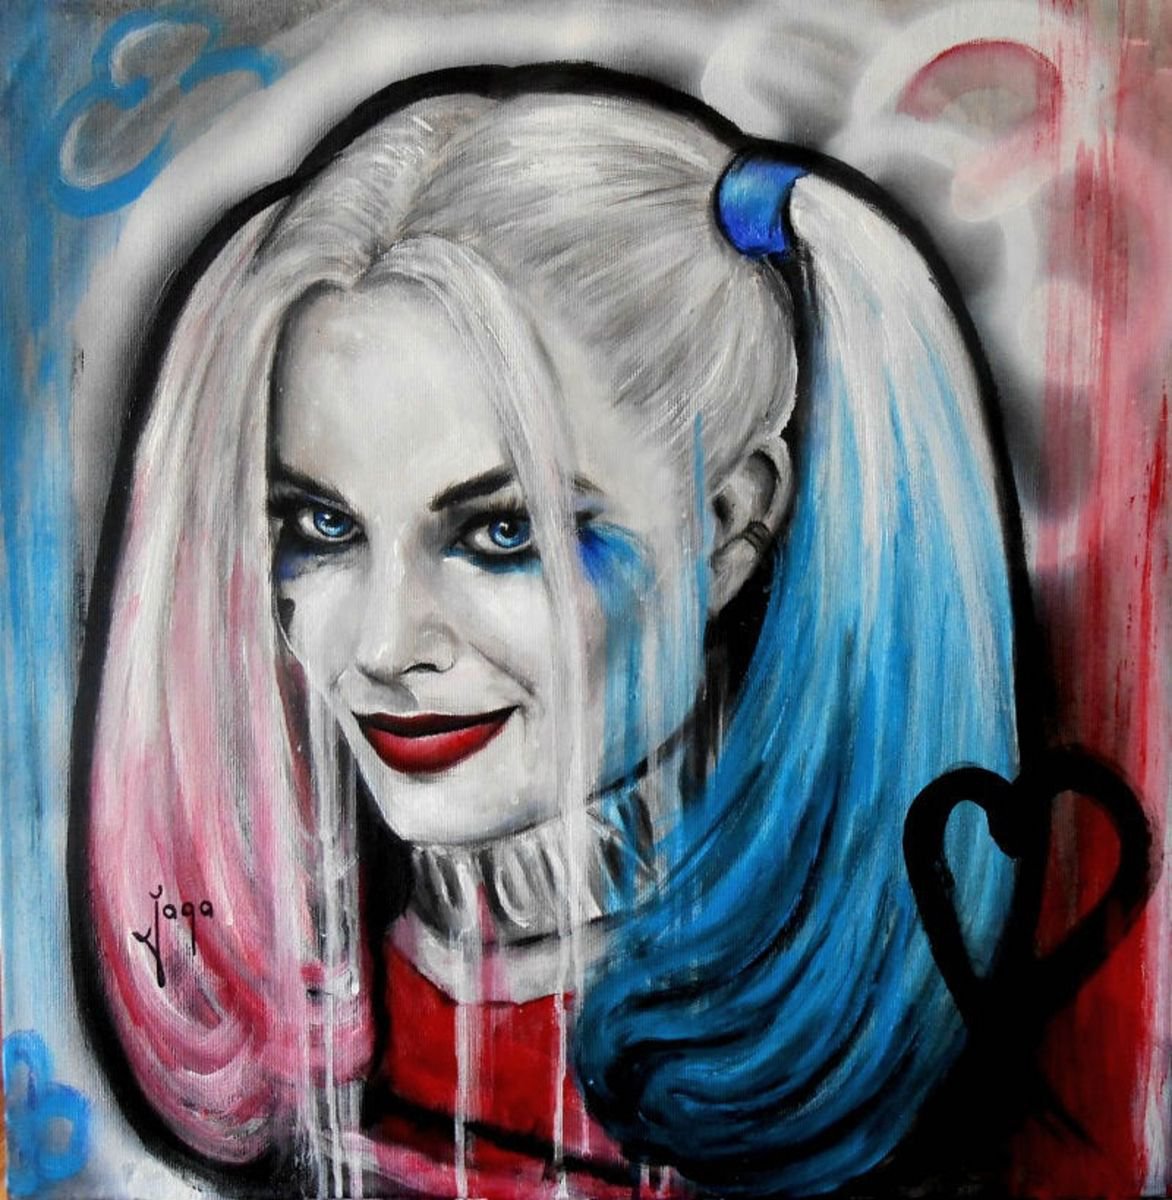 Harley Quinn Acrylic painting by Jaga | Artfinder